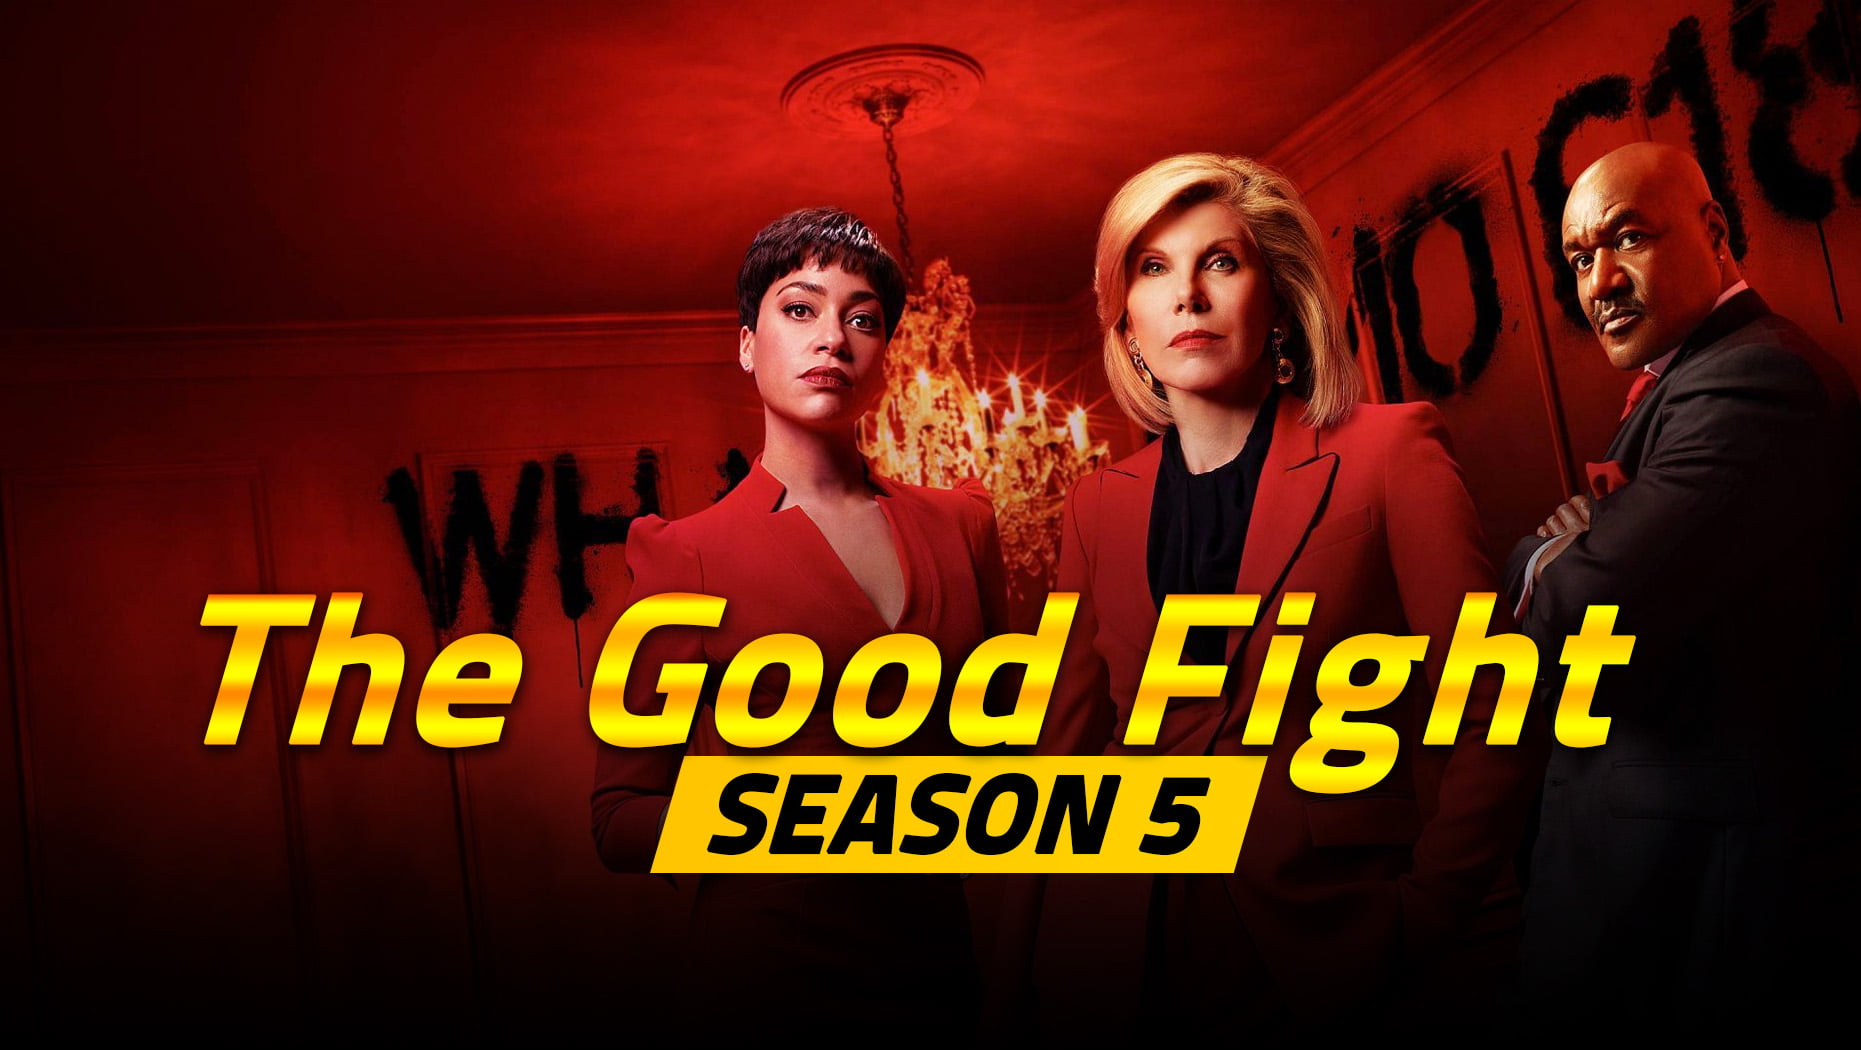 The Good Fight Season 5 Details